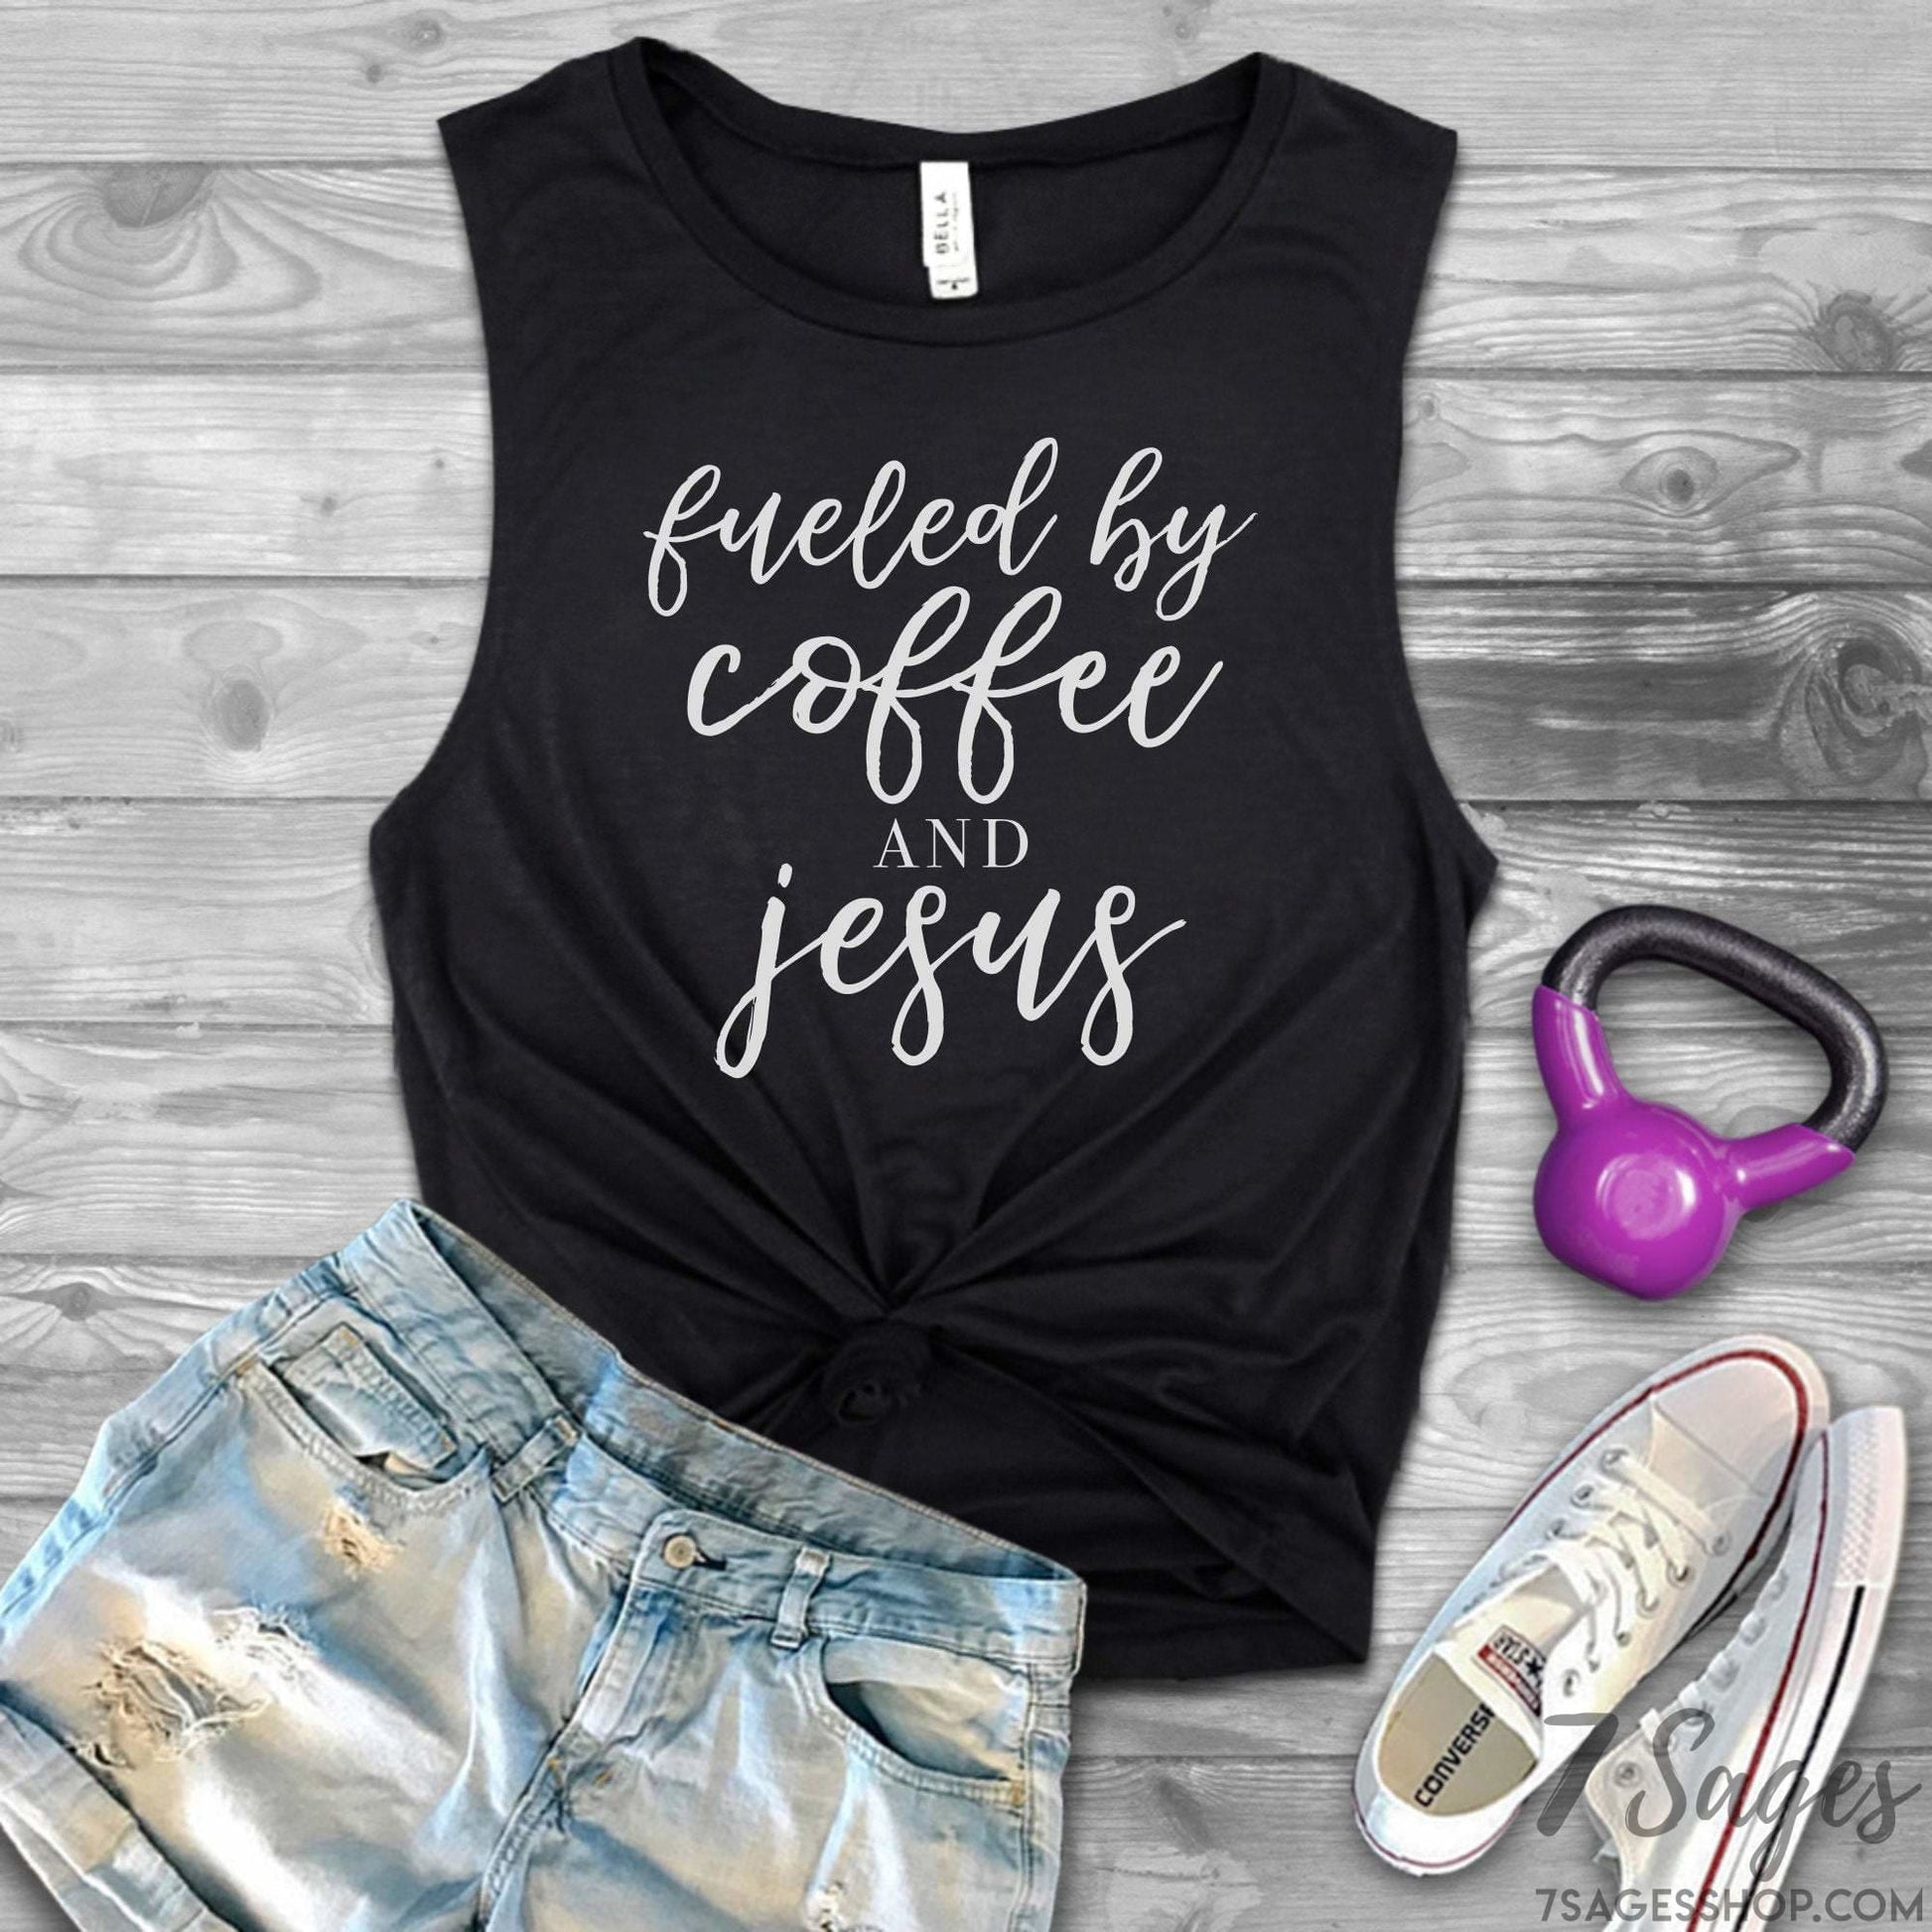 Fueled by Coffee and Jesus Shirt - Coffee Shirt - Jesus Shirt - Funny Saying Shirts